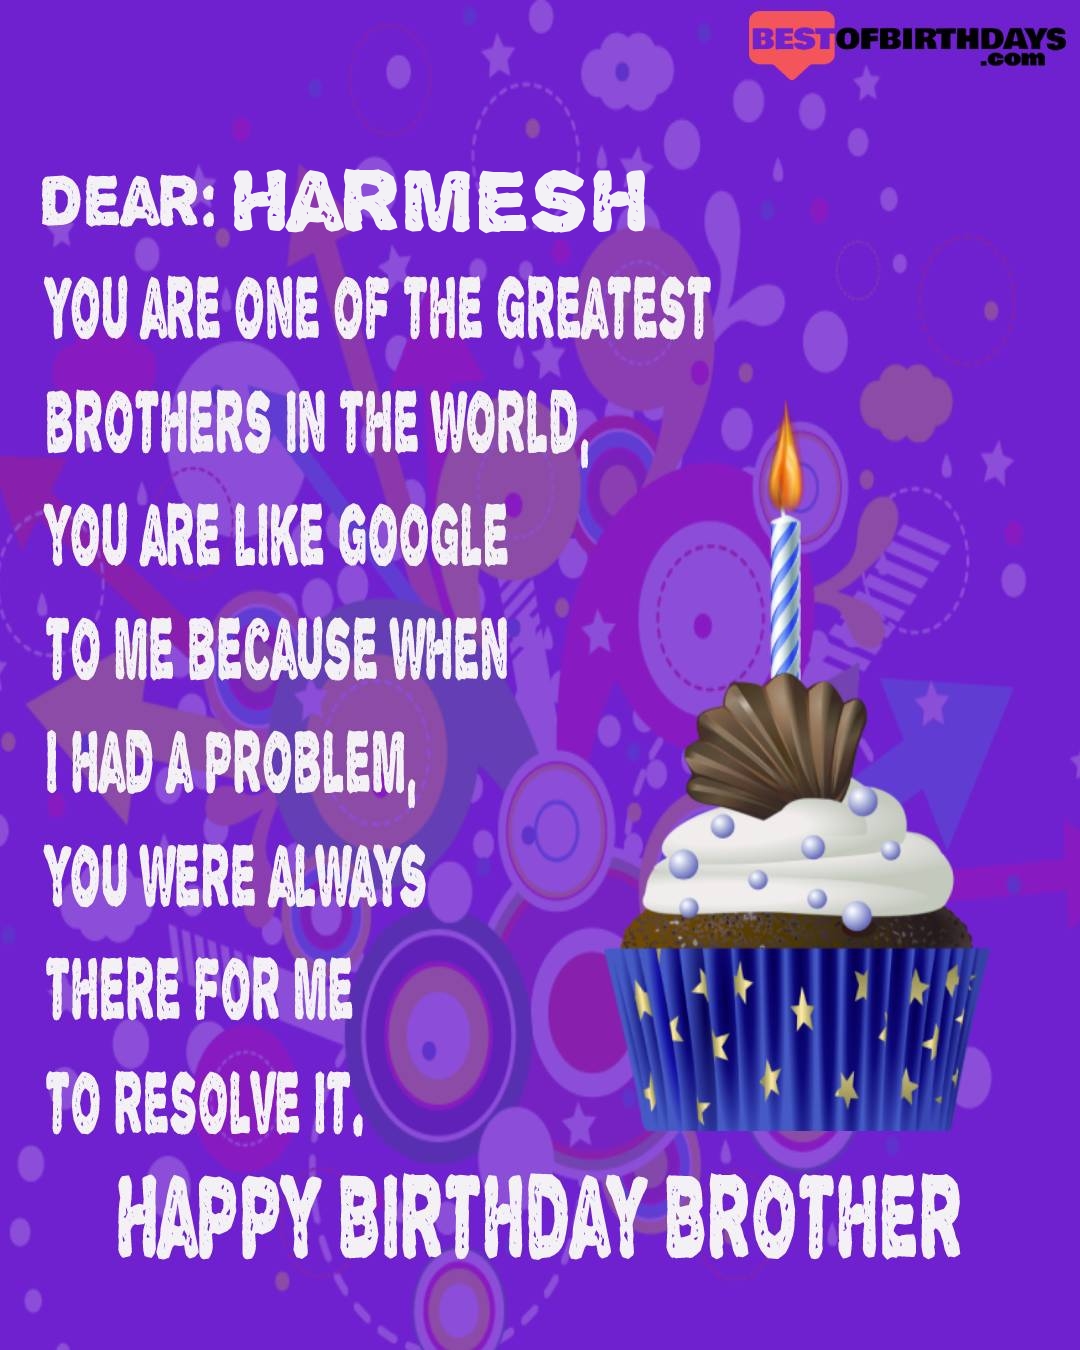 Happy birthday harmesh bhai brother bro